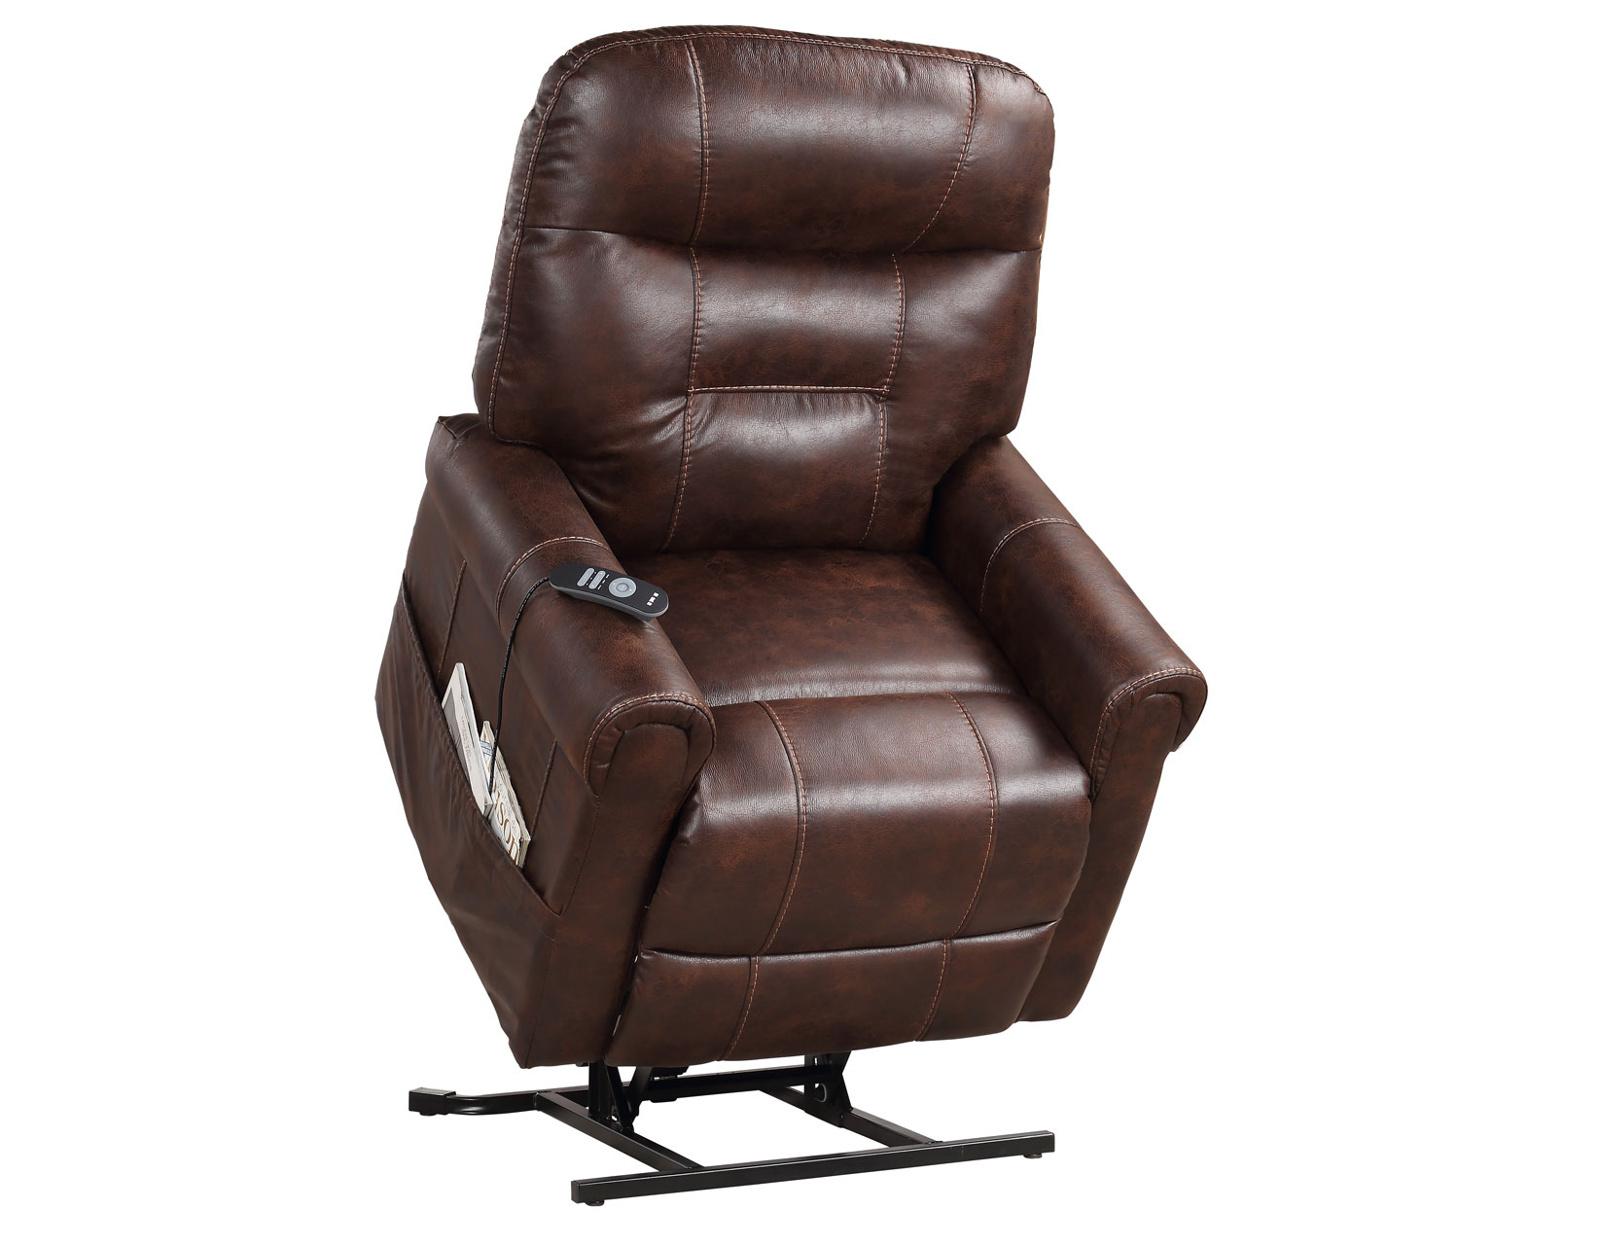 Steve Silver Ottawa Power Lift Chair with Heat and Massage in Walnut - Luxury Home Furniture (MI)